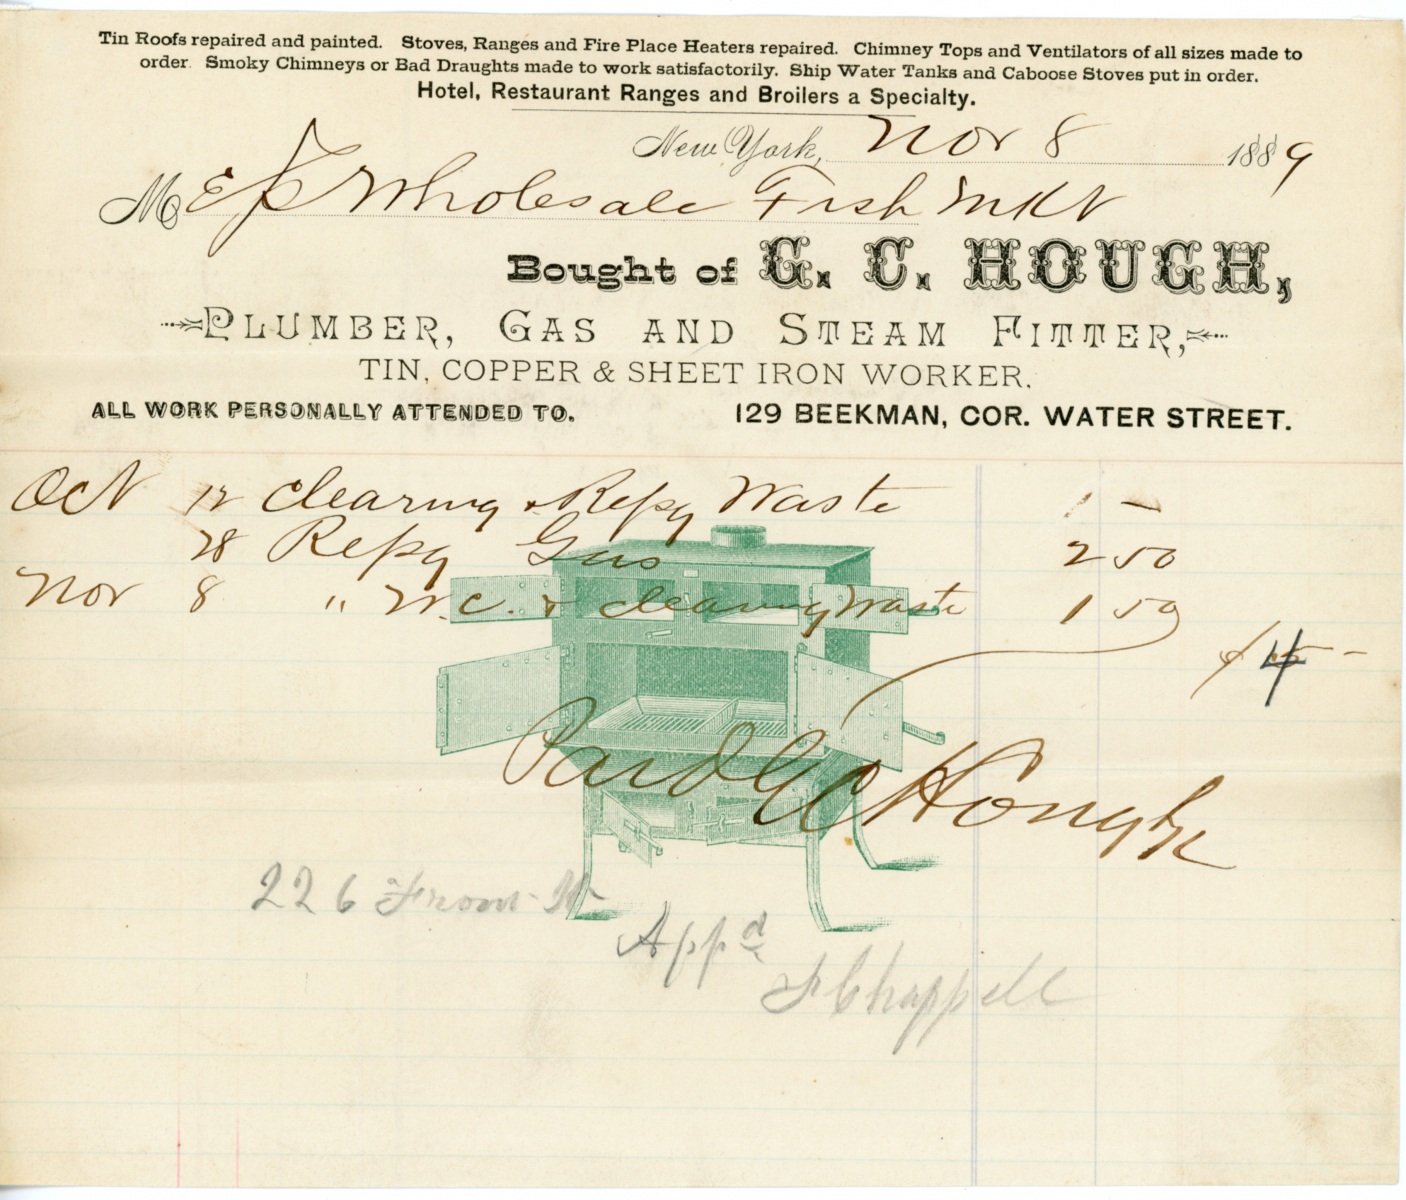 Bill, G.C. Hough, Plumber, Gas and Steam Fitter, November 8, 1889